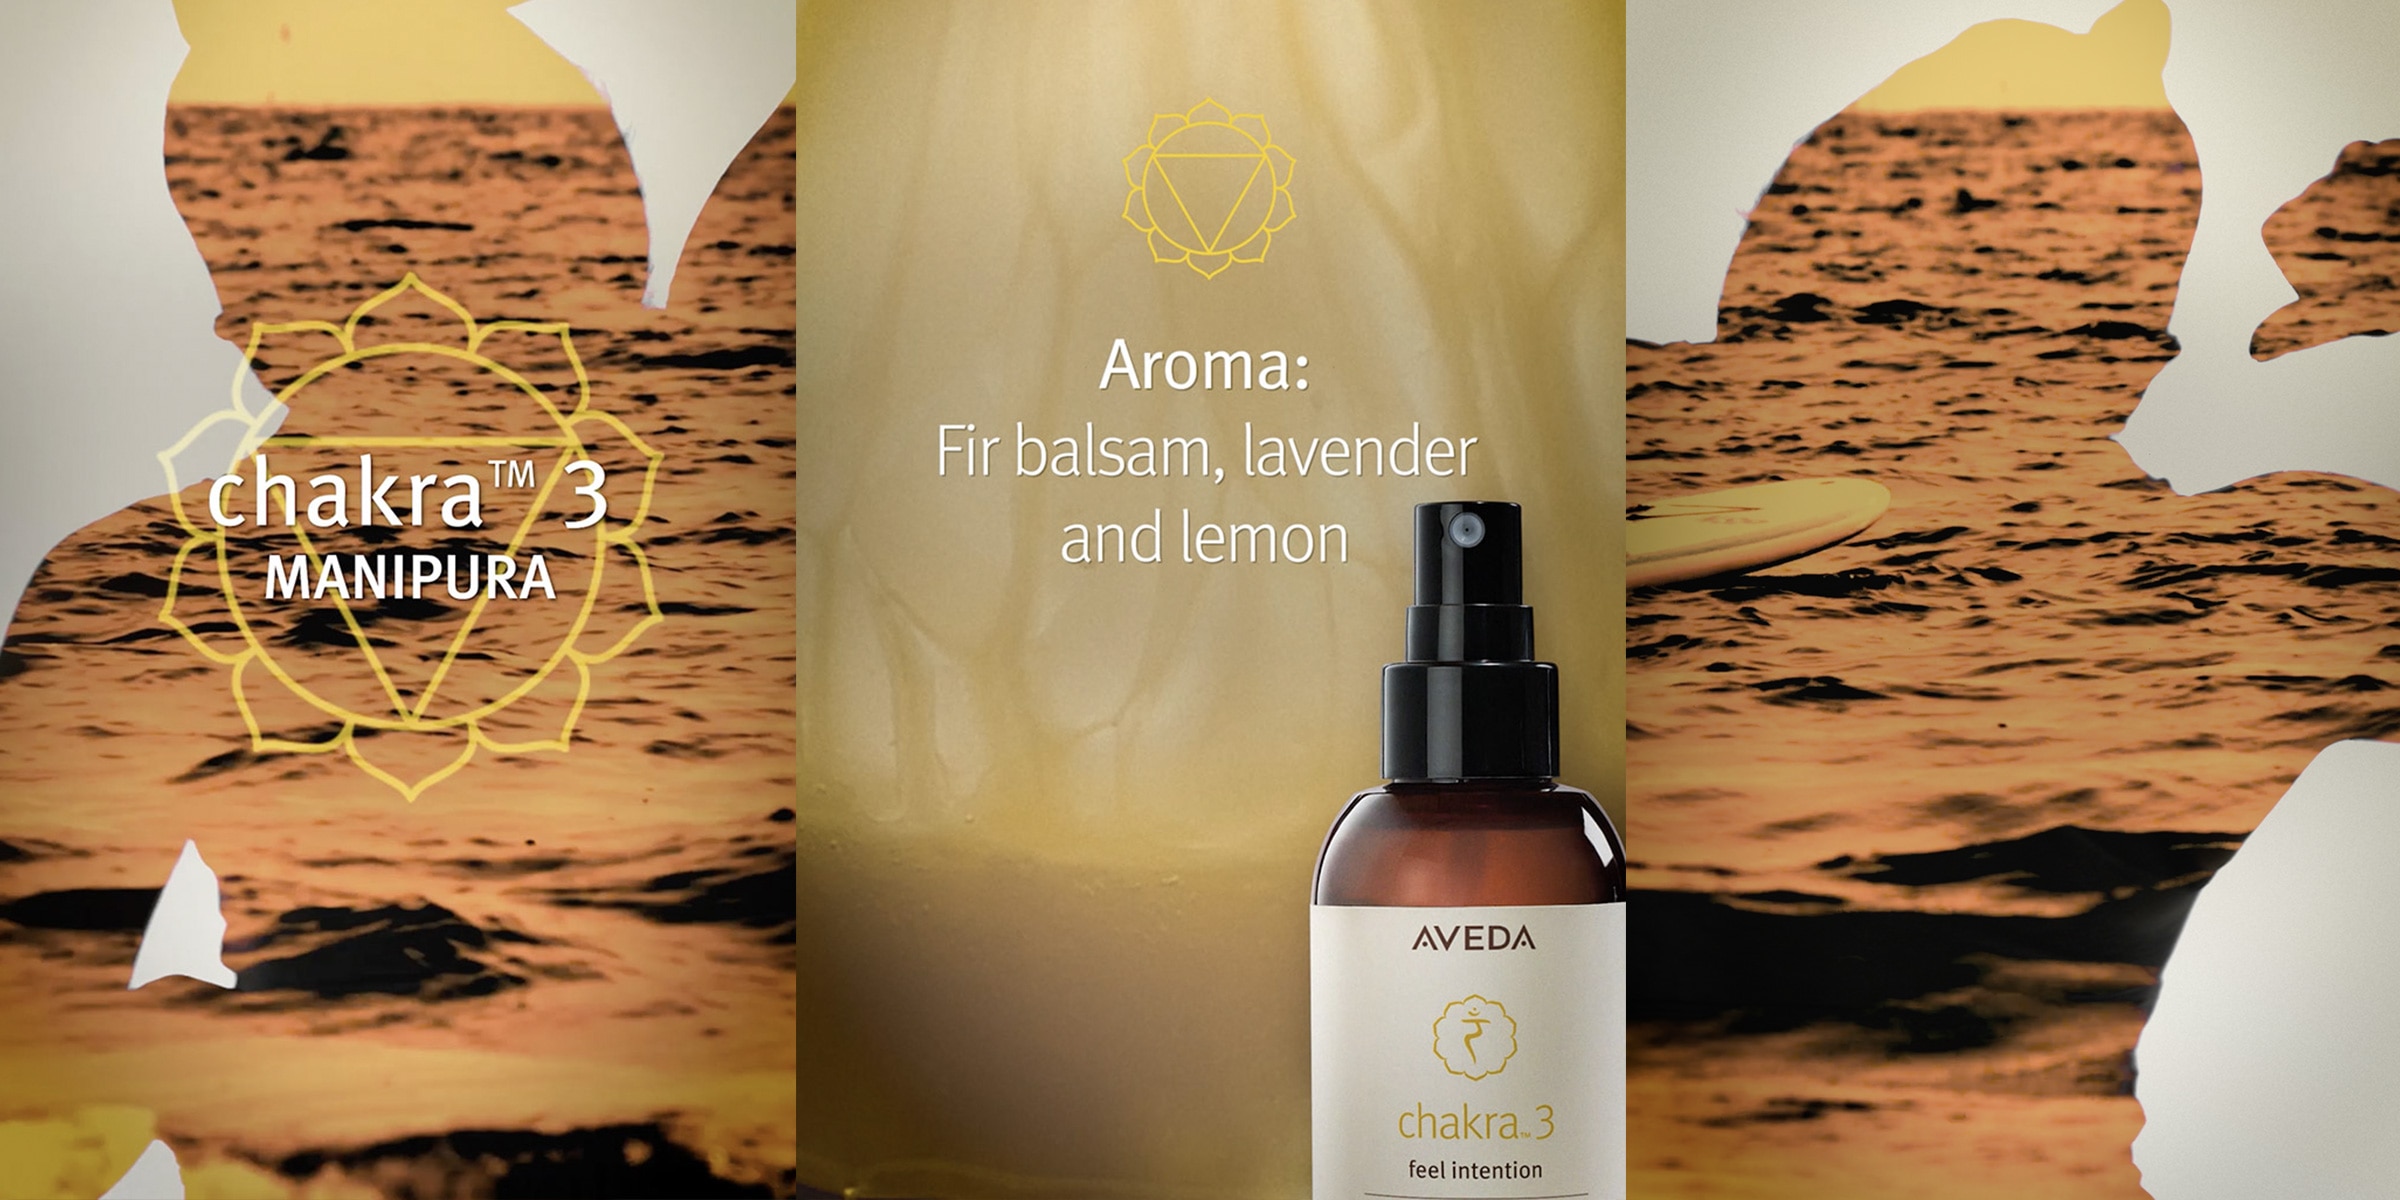 Chakra 3 aroma includes Fir balsam, lavender and lemon